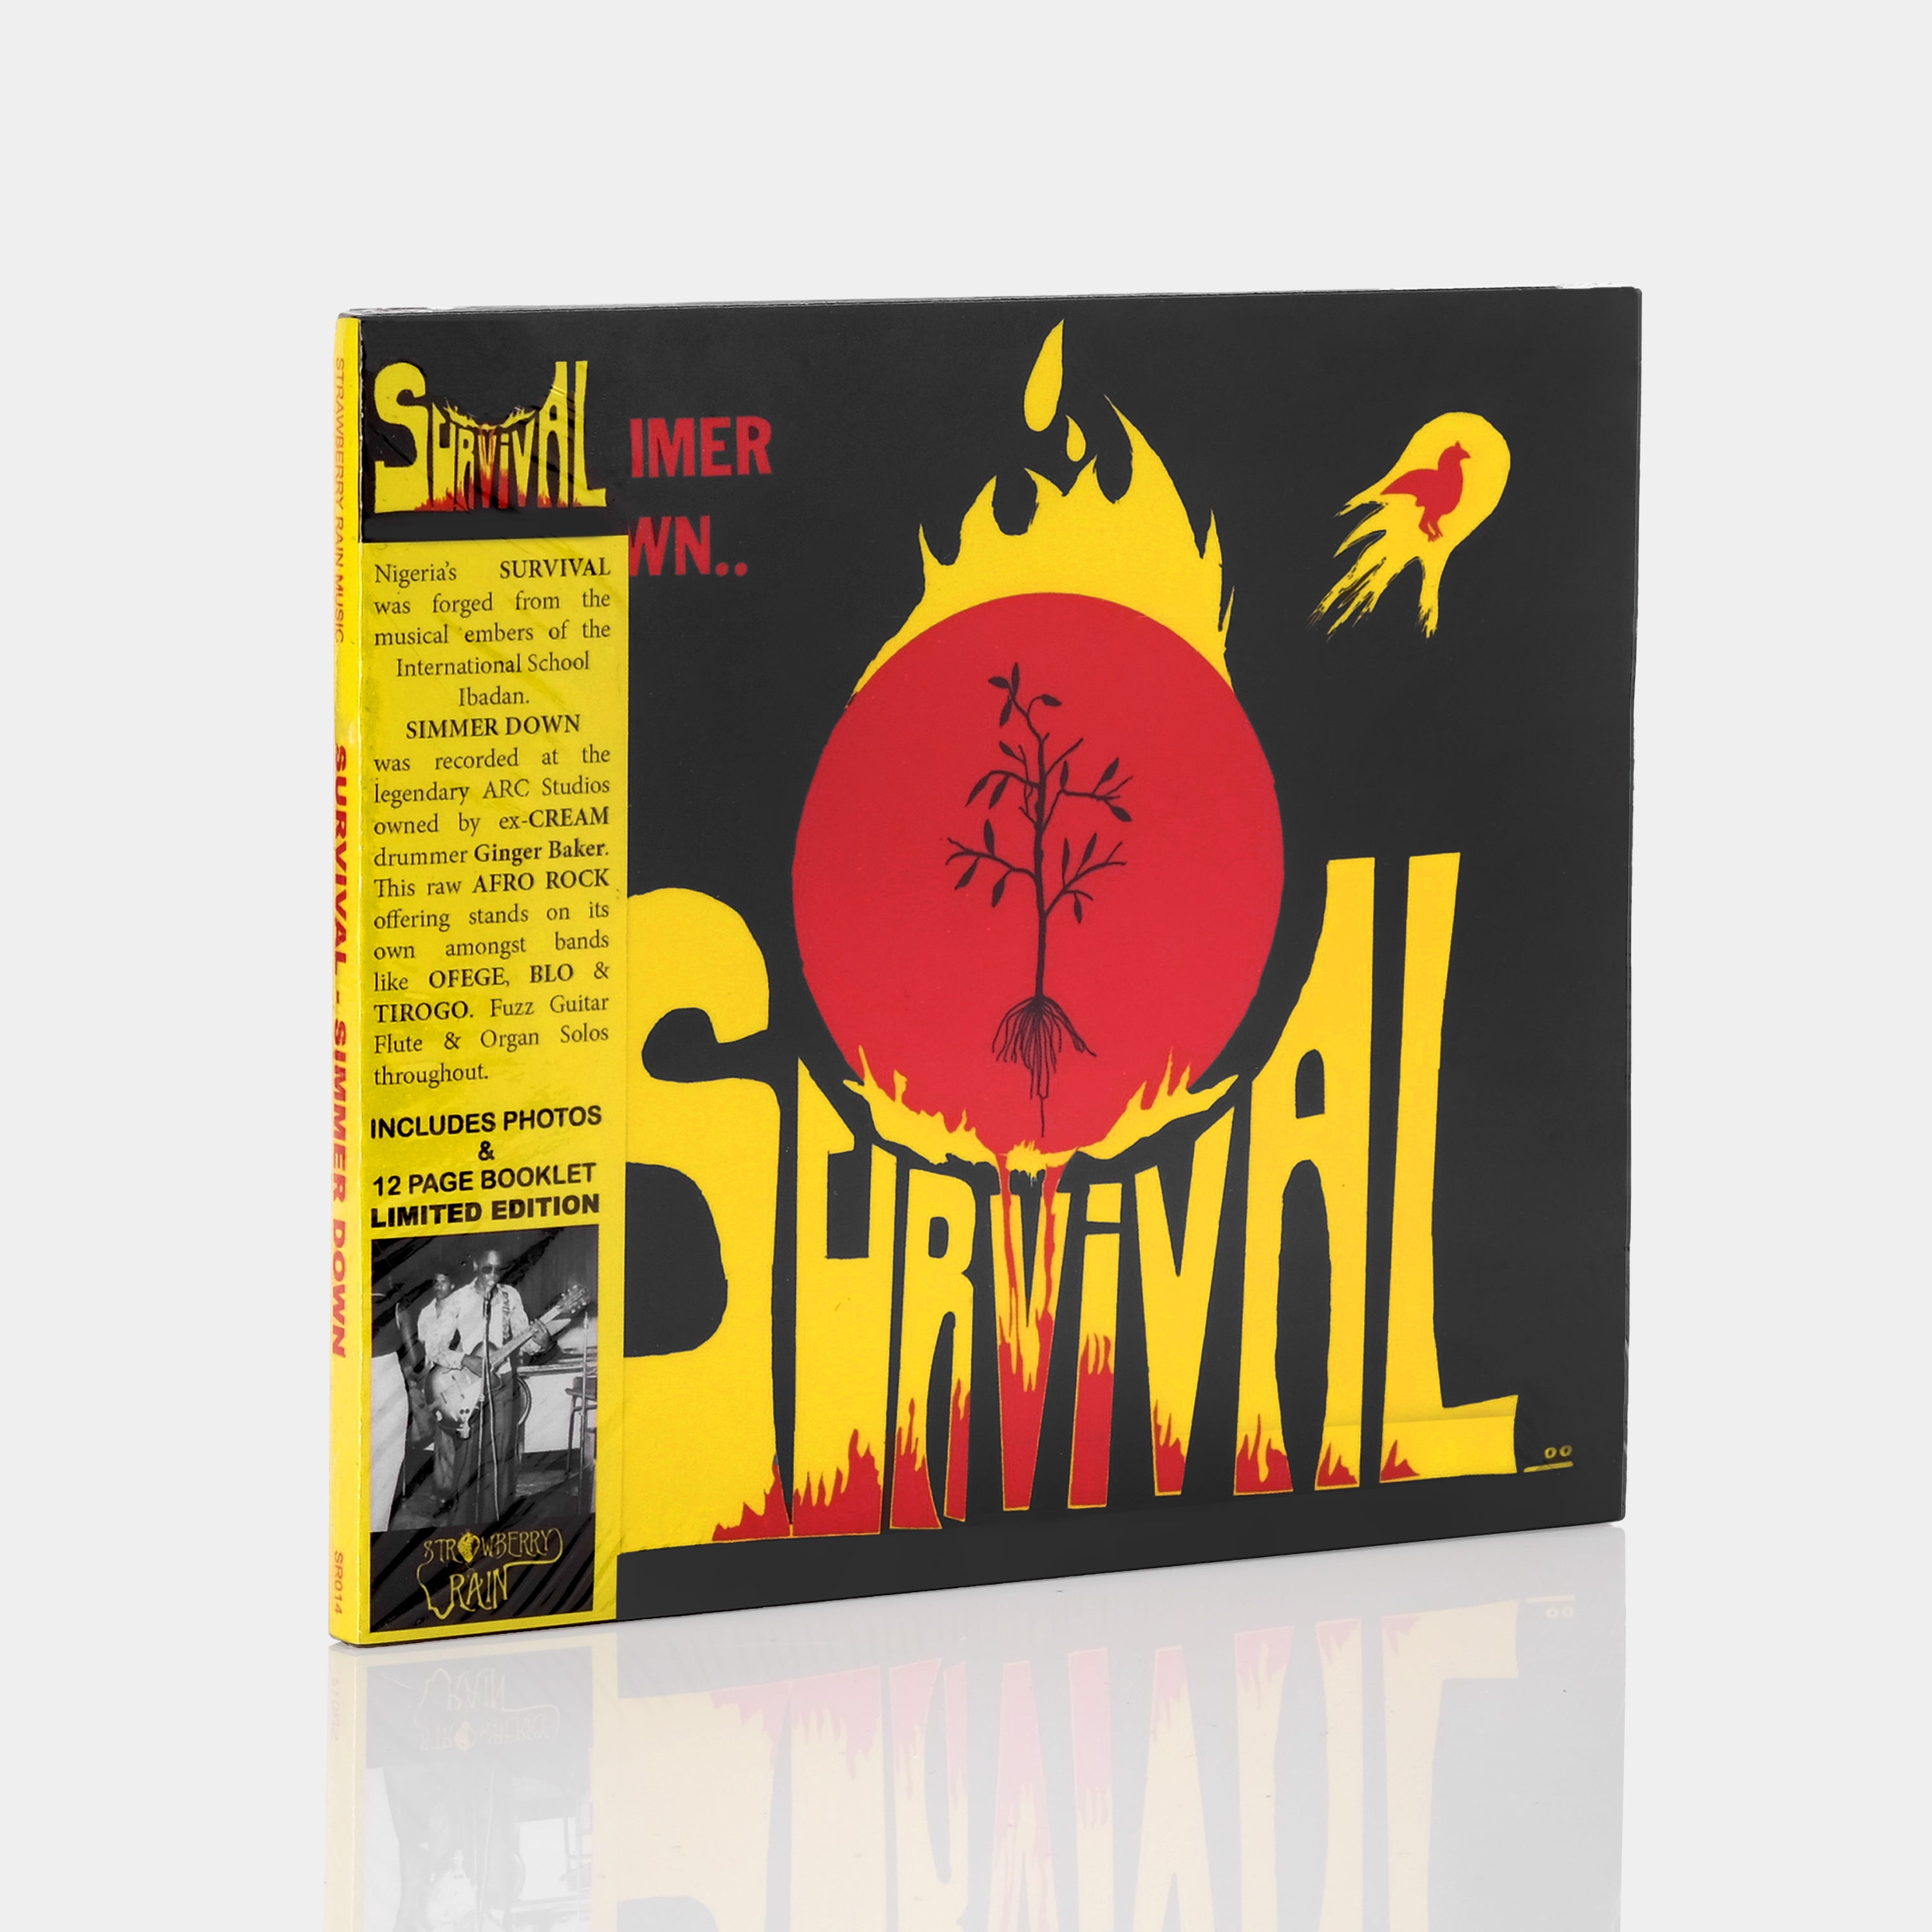 Survival - Simmer Down CD